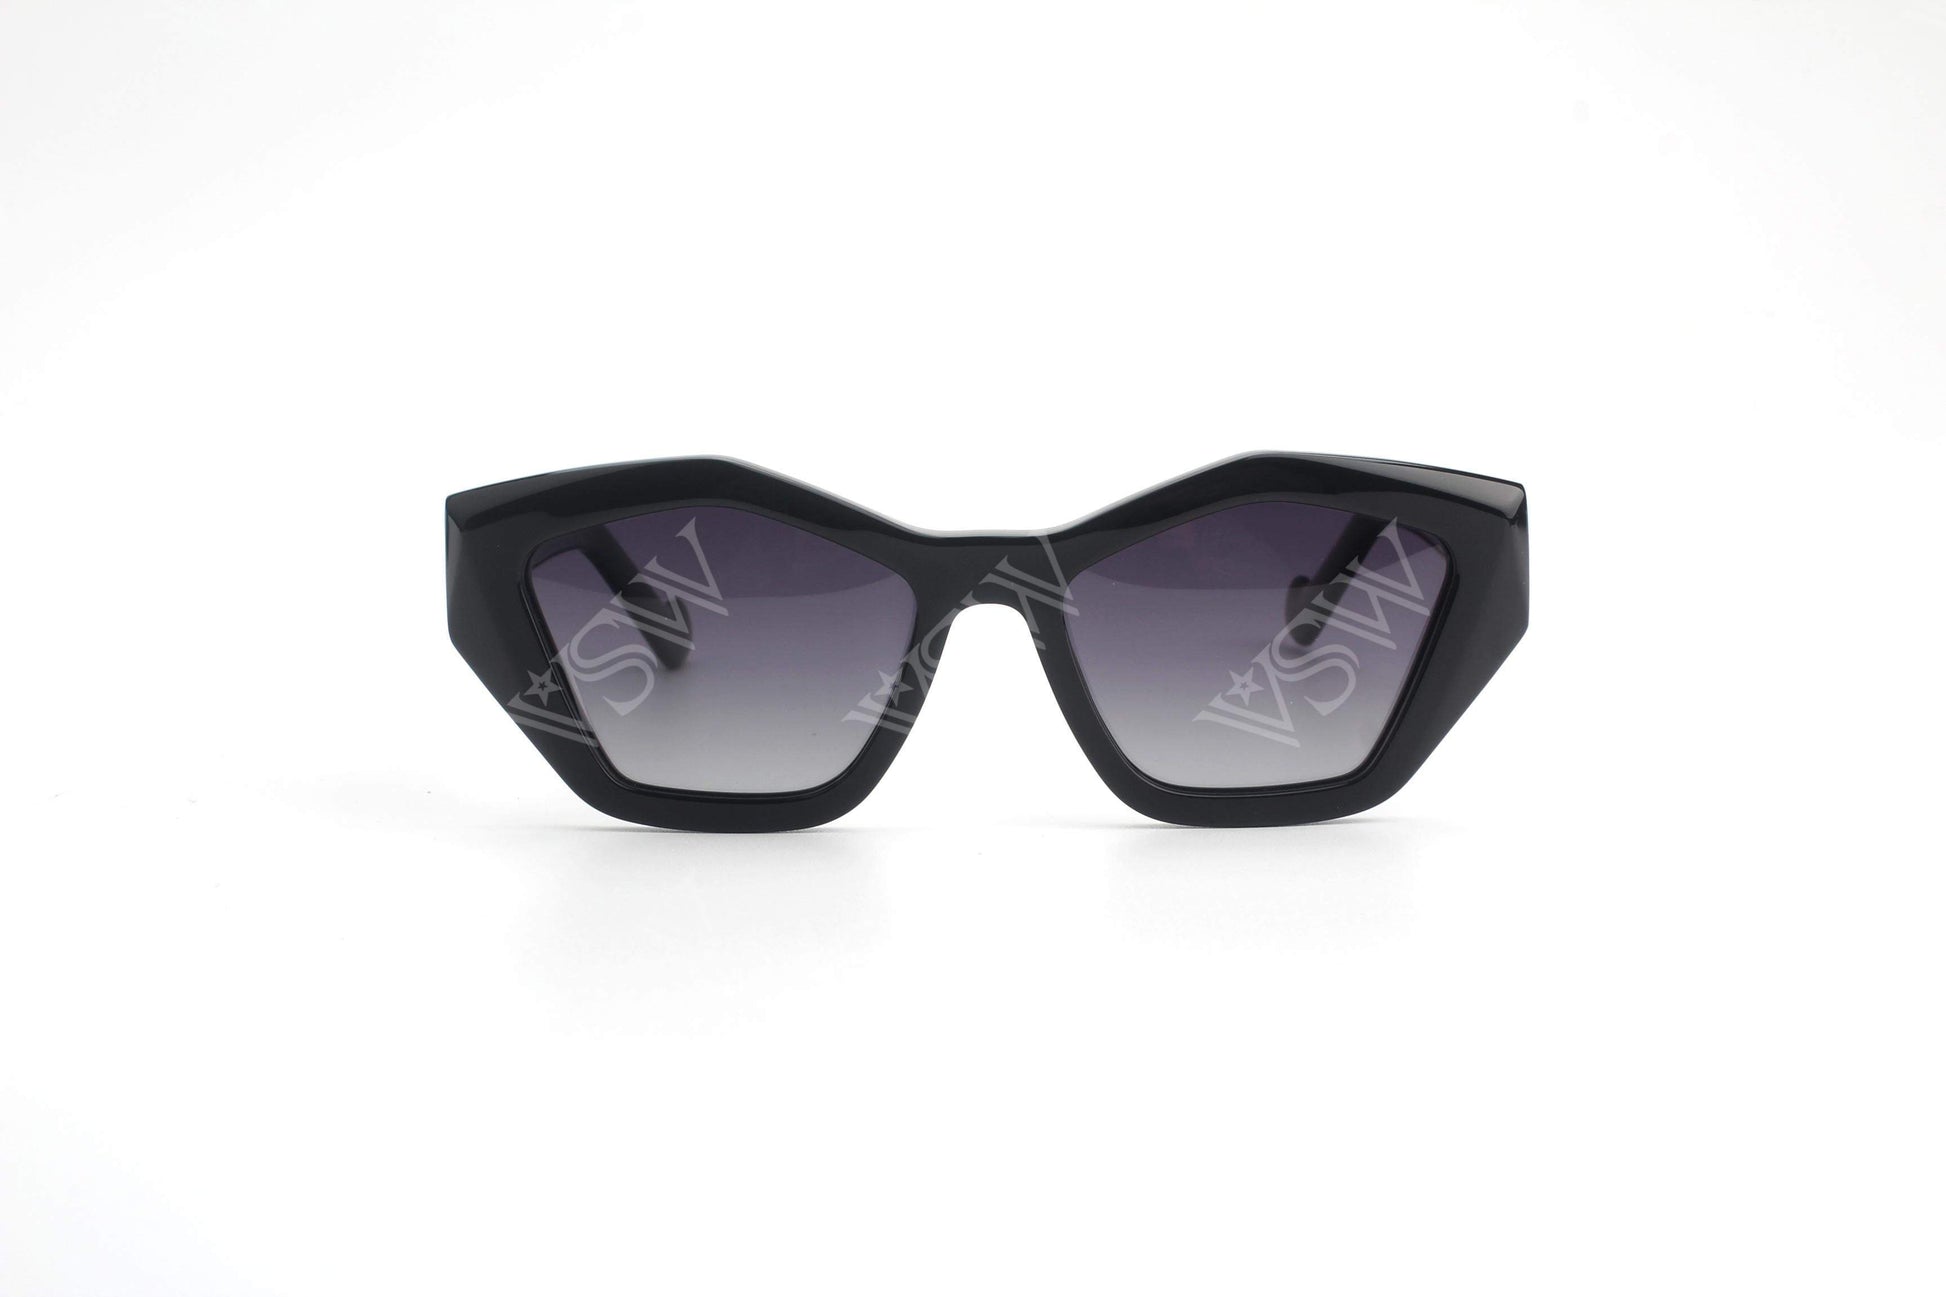 Sunglass Marshall - Sunglasses from [store] by VSW - women sunglasses